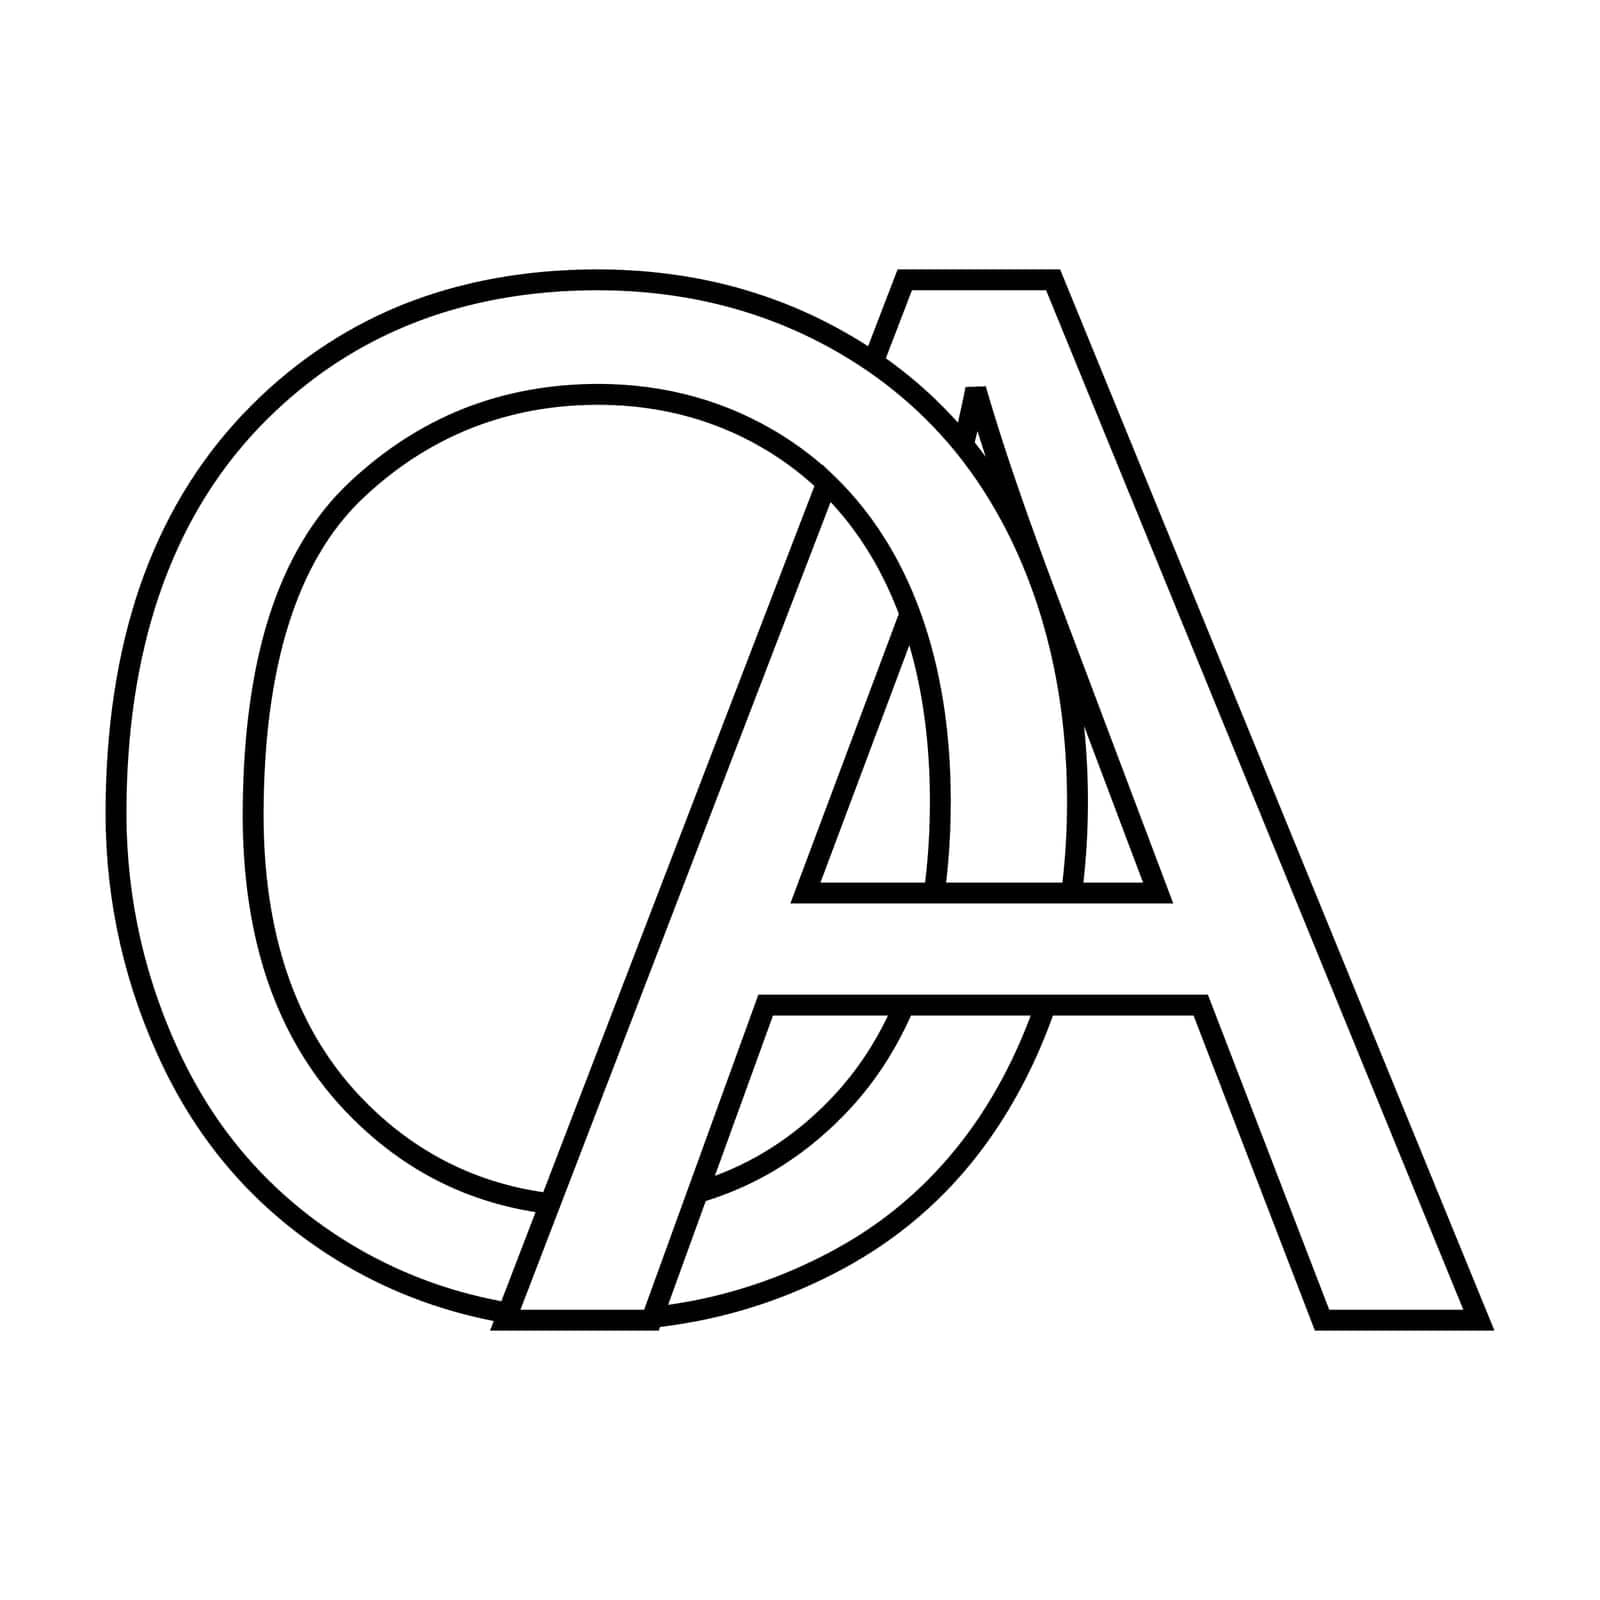 Logo sign oa ao icon double letters logotype a o by koksikoks